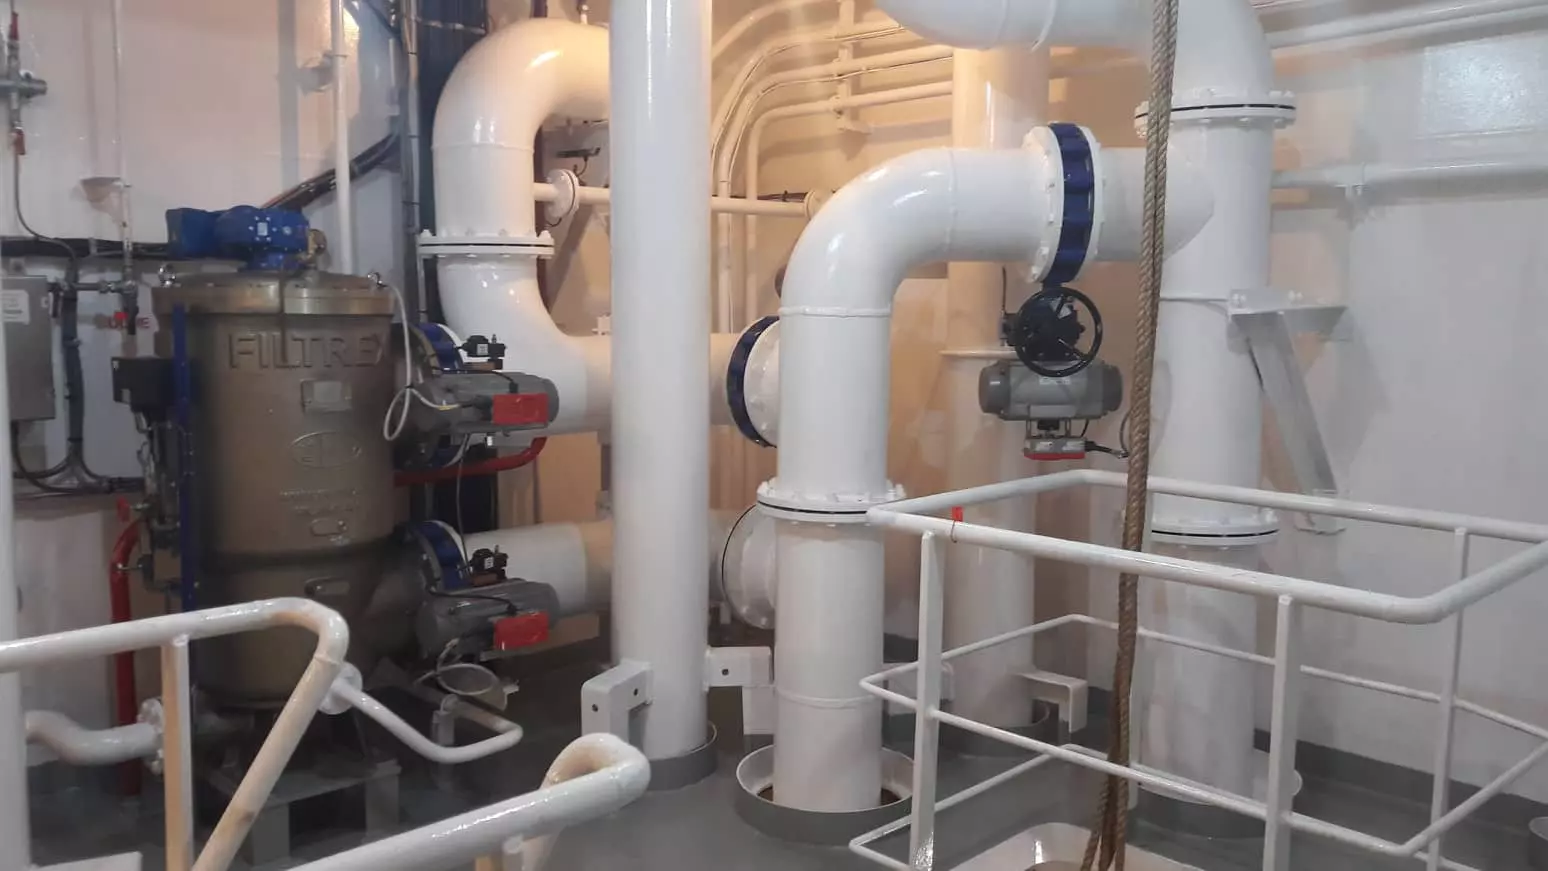 ballast water treatment system installation (BWTS)